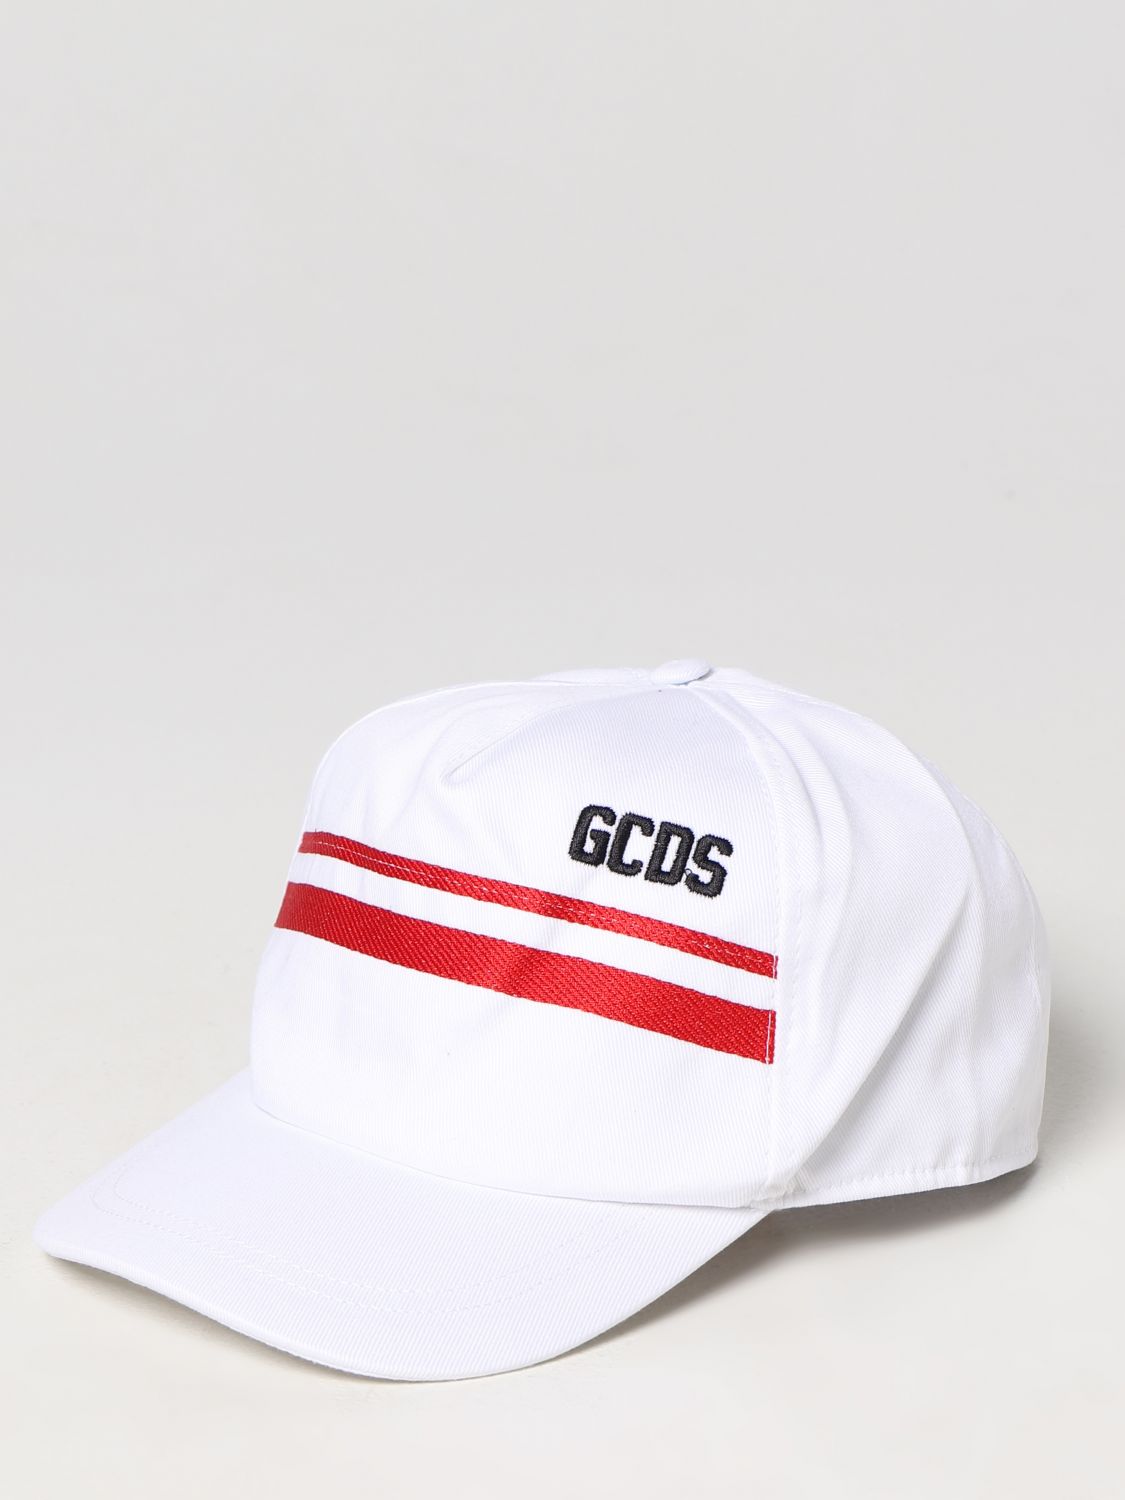 Gcds Girls' Hats  Kids Kids Colour White